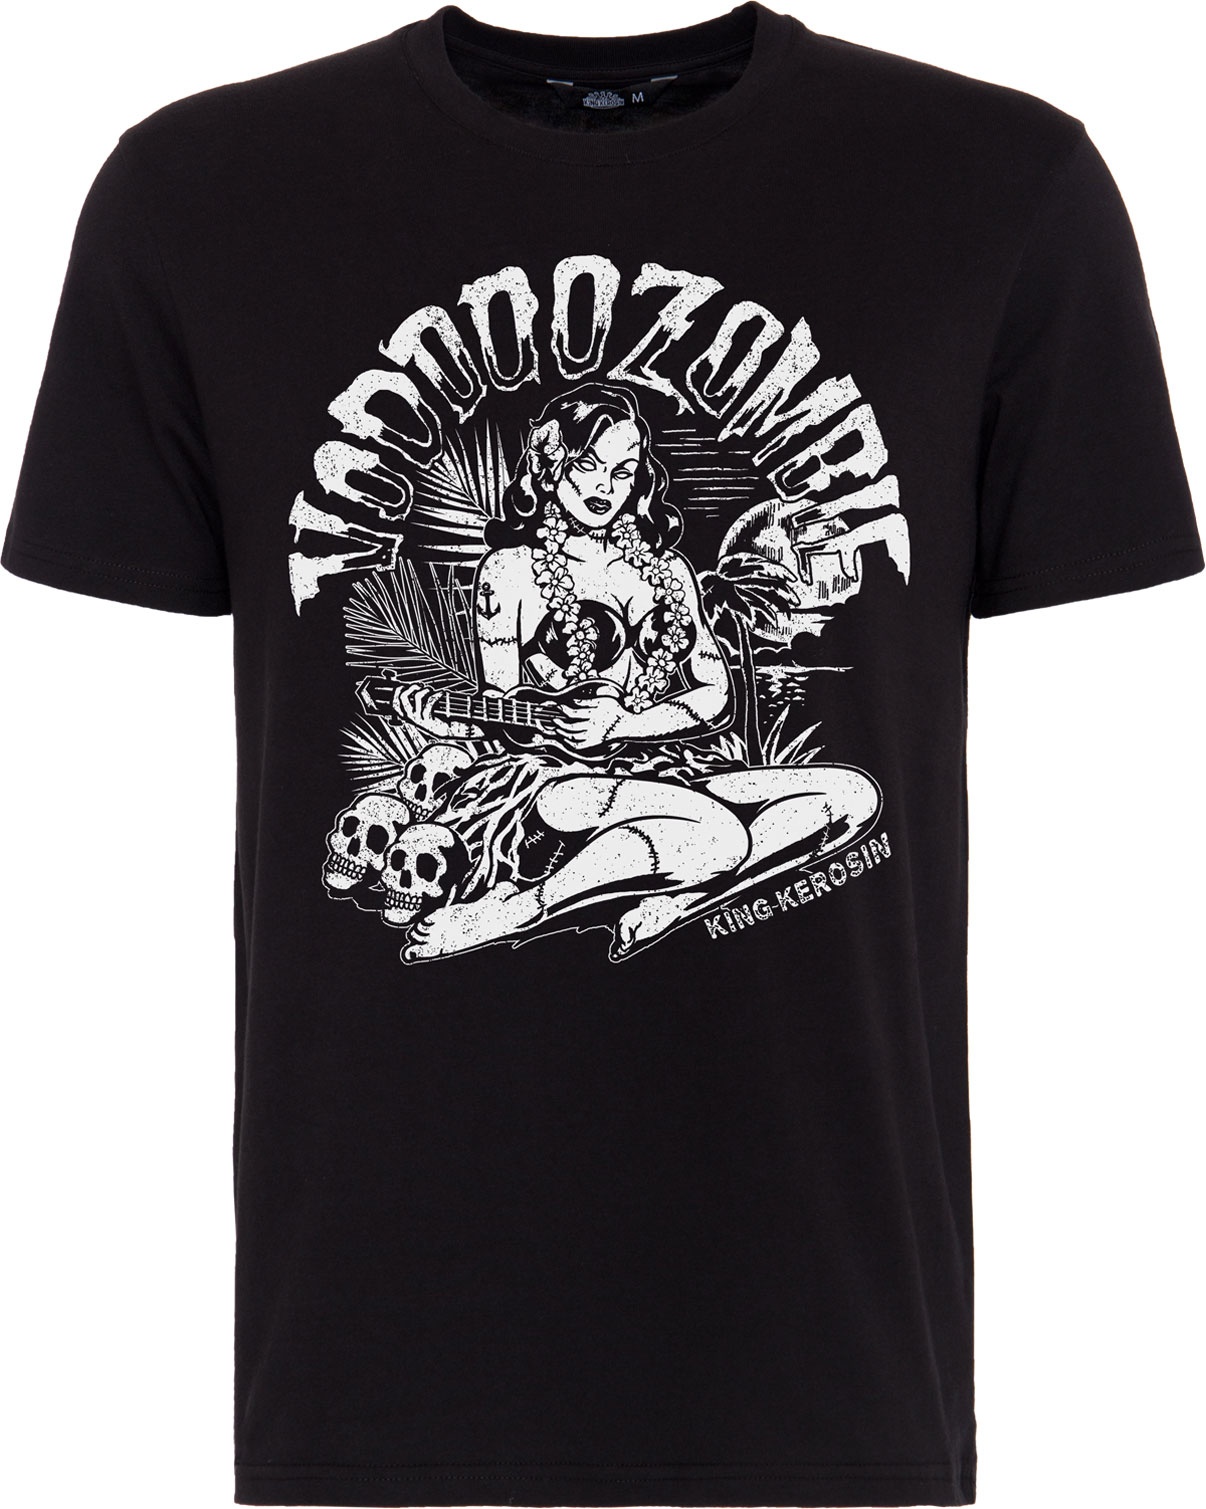 King Kerosin Voodoo Zombie, t-shirt - Noir/Blanc - M